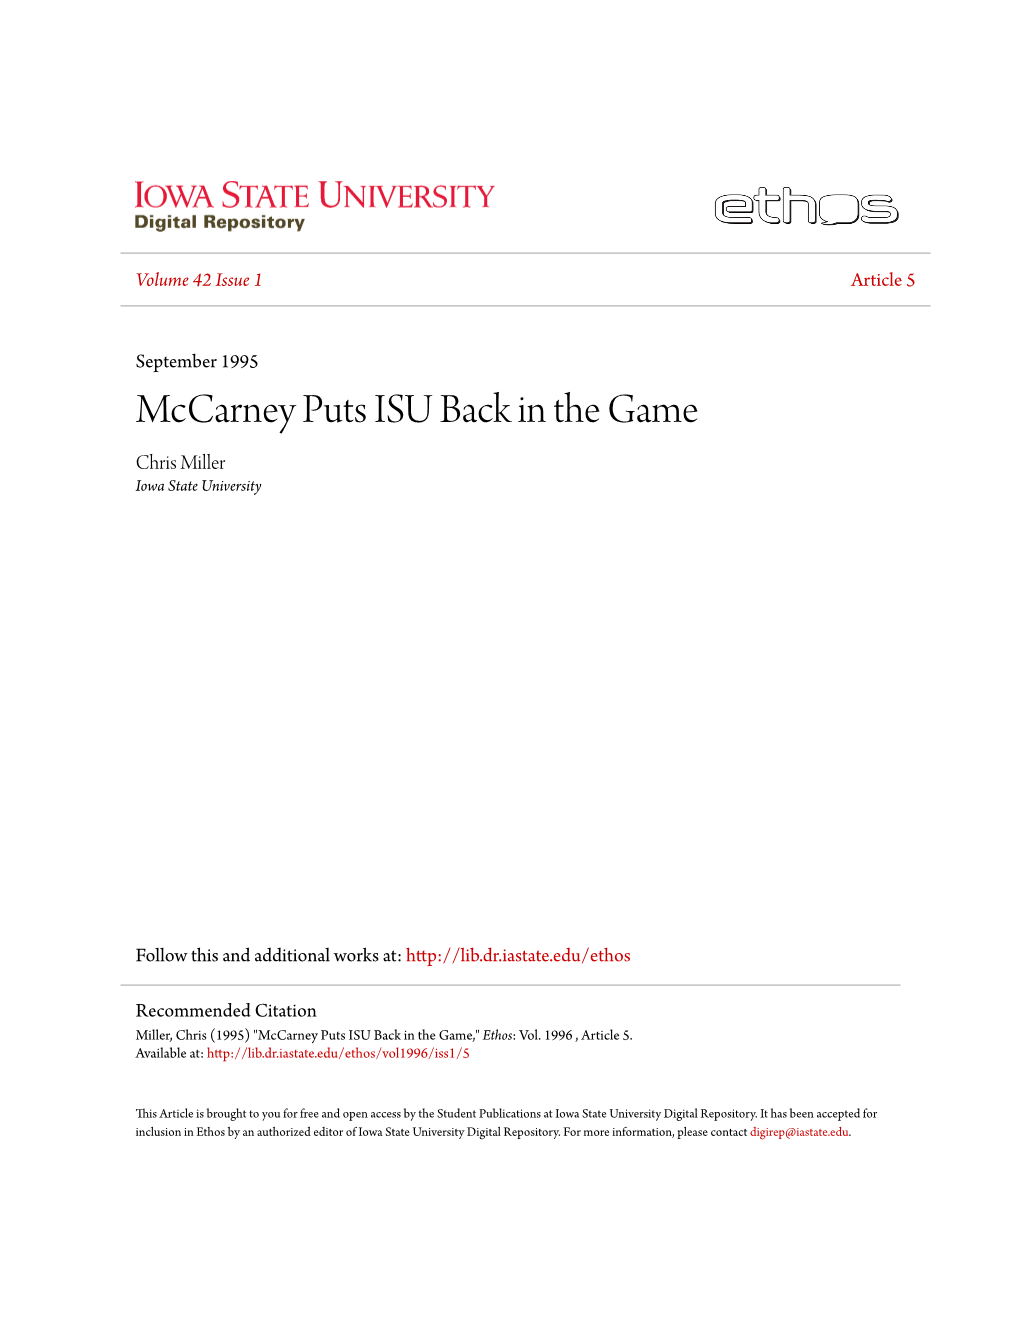 Mccarney Puts ISU Back in the Game Chris Miller Iowa State University